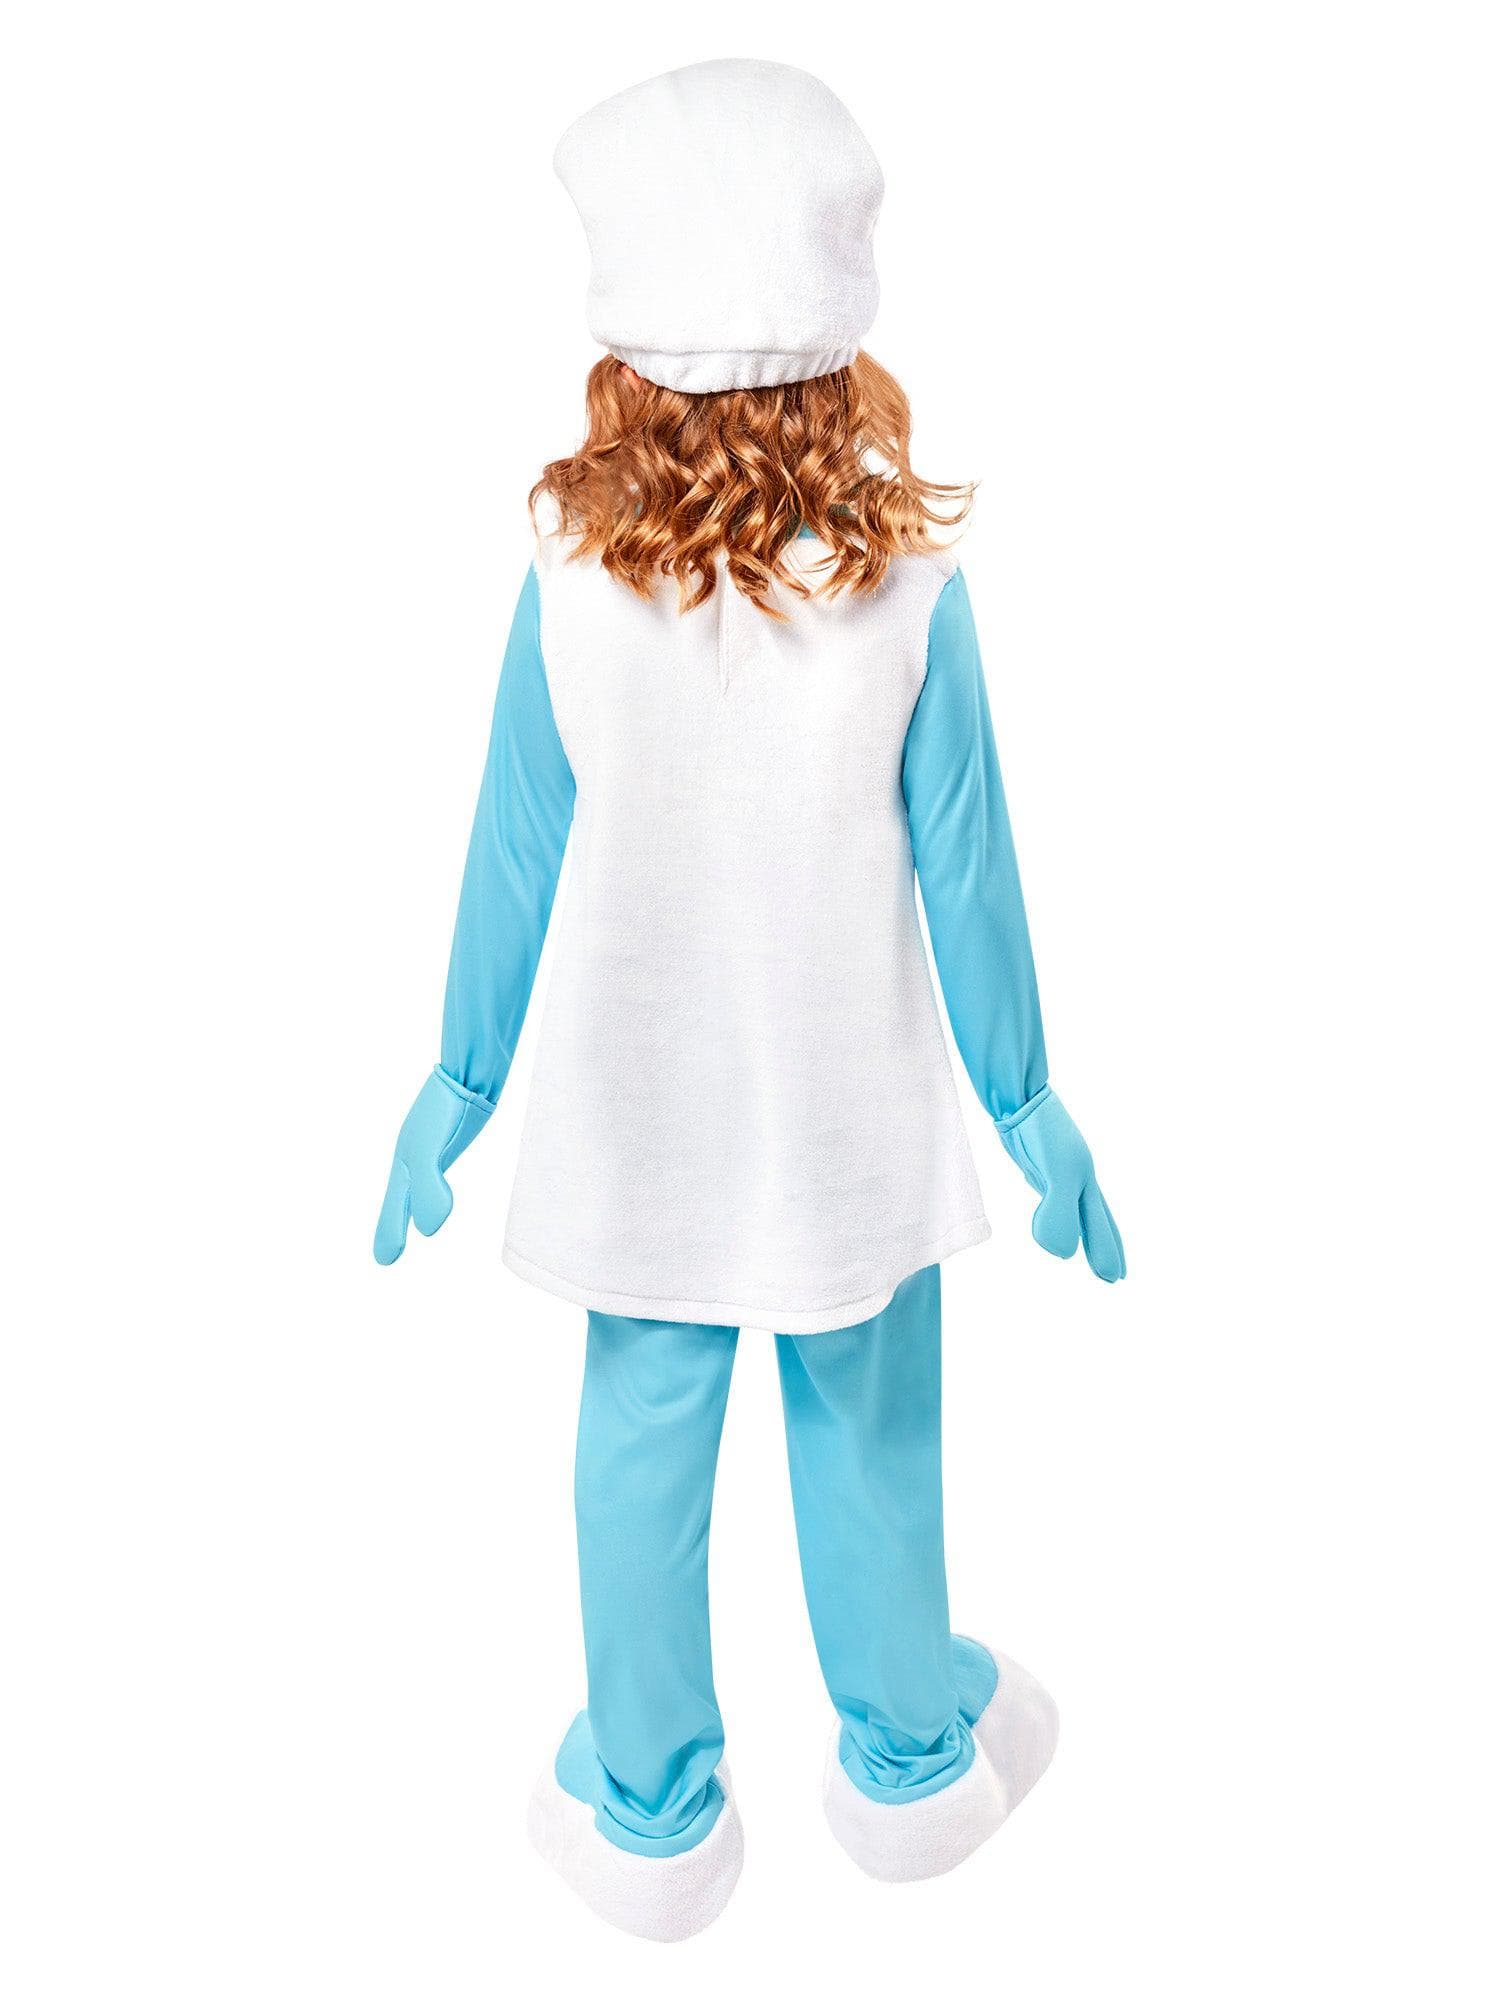 The Smurfs Smurfette Kids Costume - costumes.com